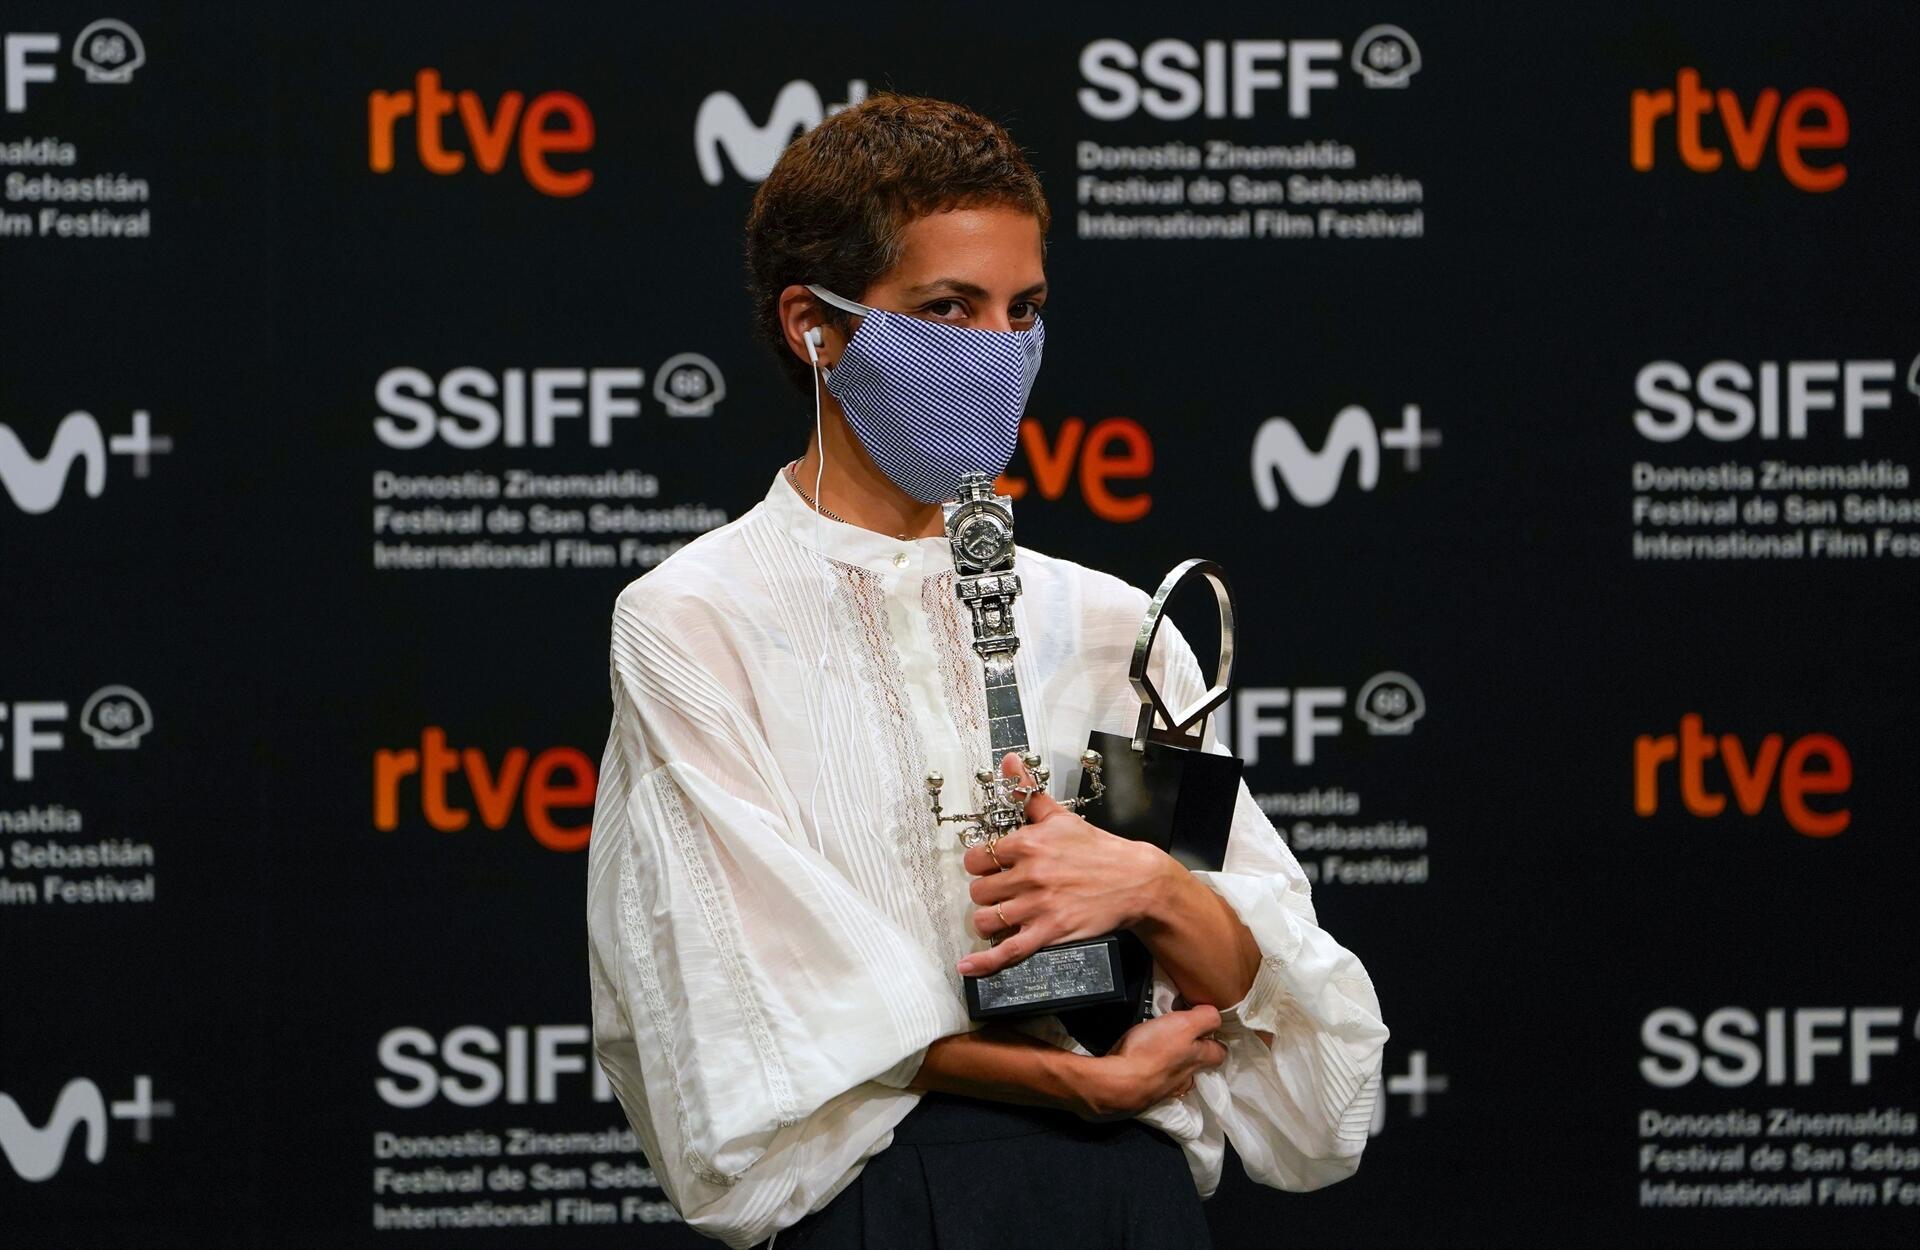 San Sebastian Film Festival Announces Award Winners